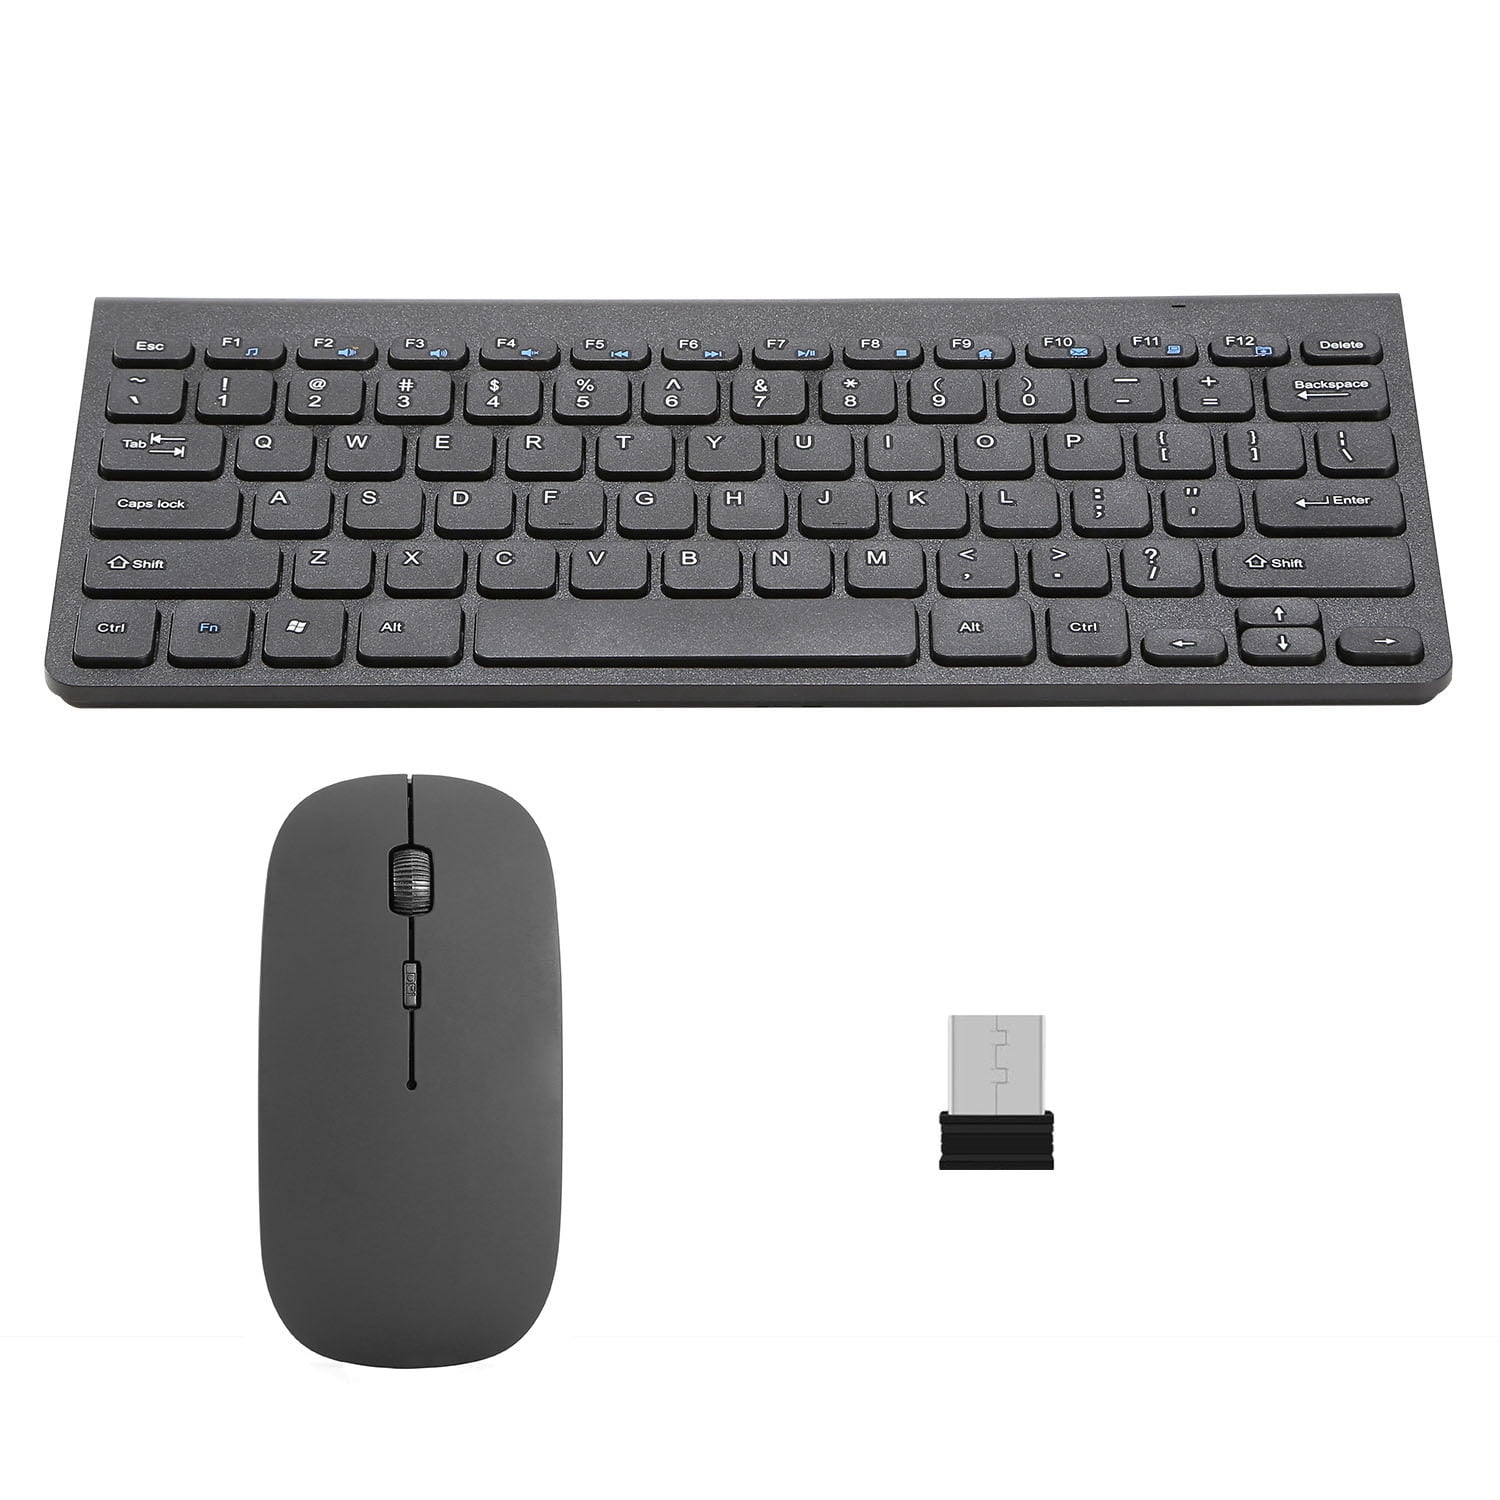 Wireless MINI Keyboard and Mouse for Windows 7 & 8 Desktop PC Laptops BK 